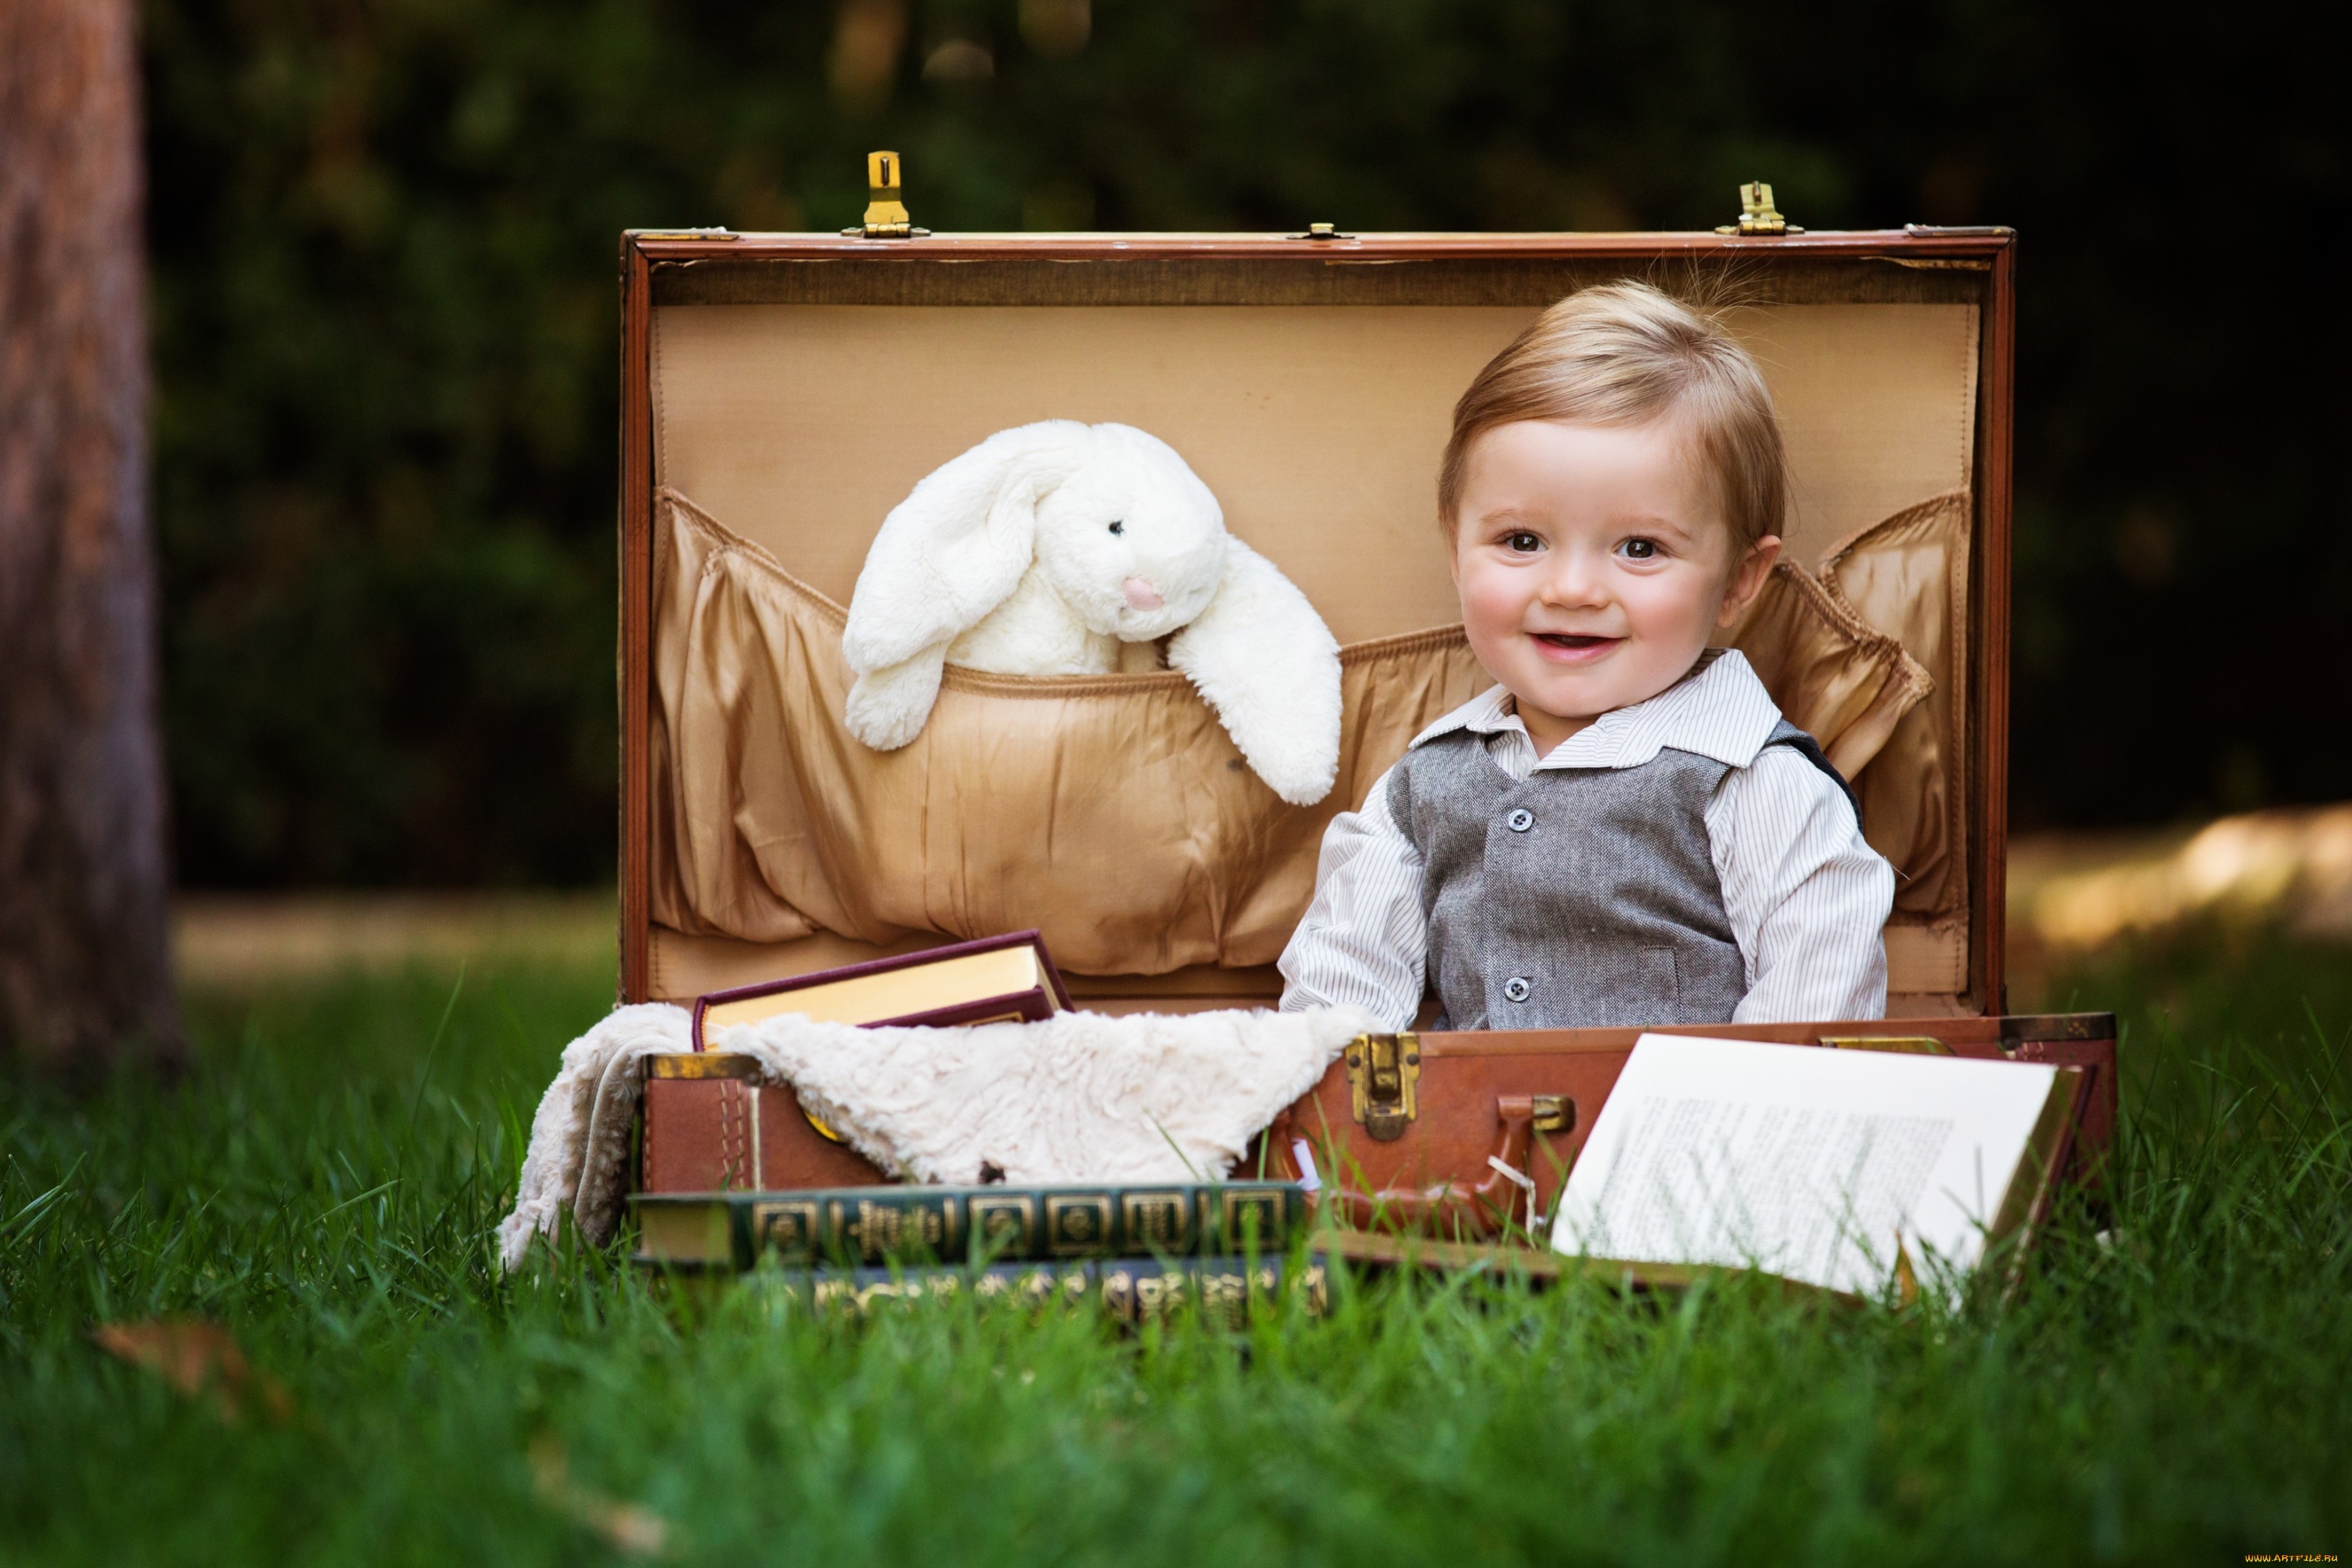 photography, child, grass, little boy, stuffed animal, suitcase 2160p